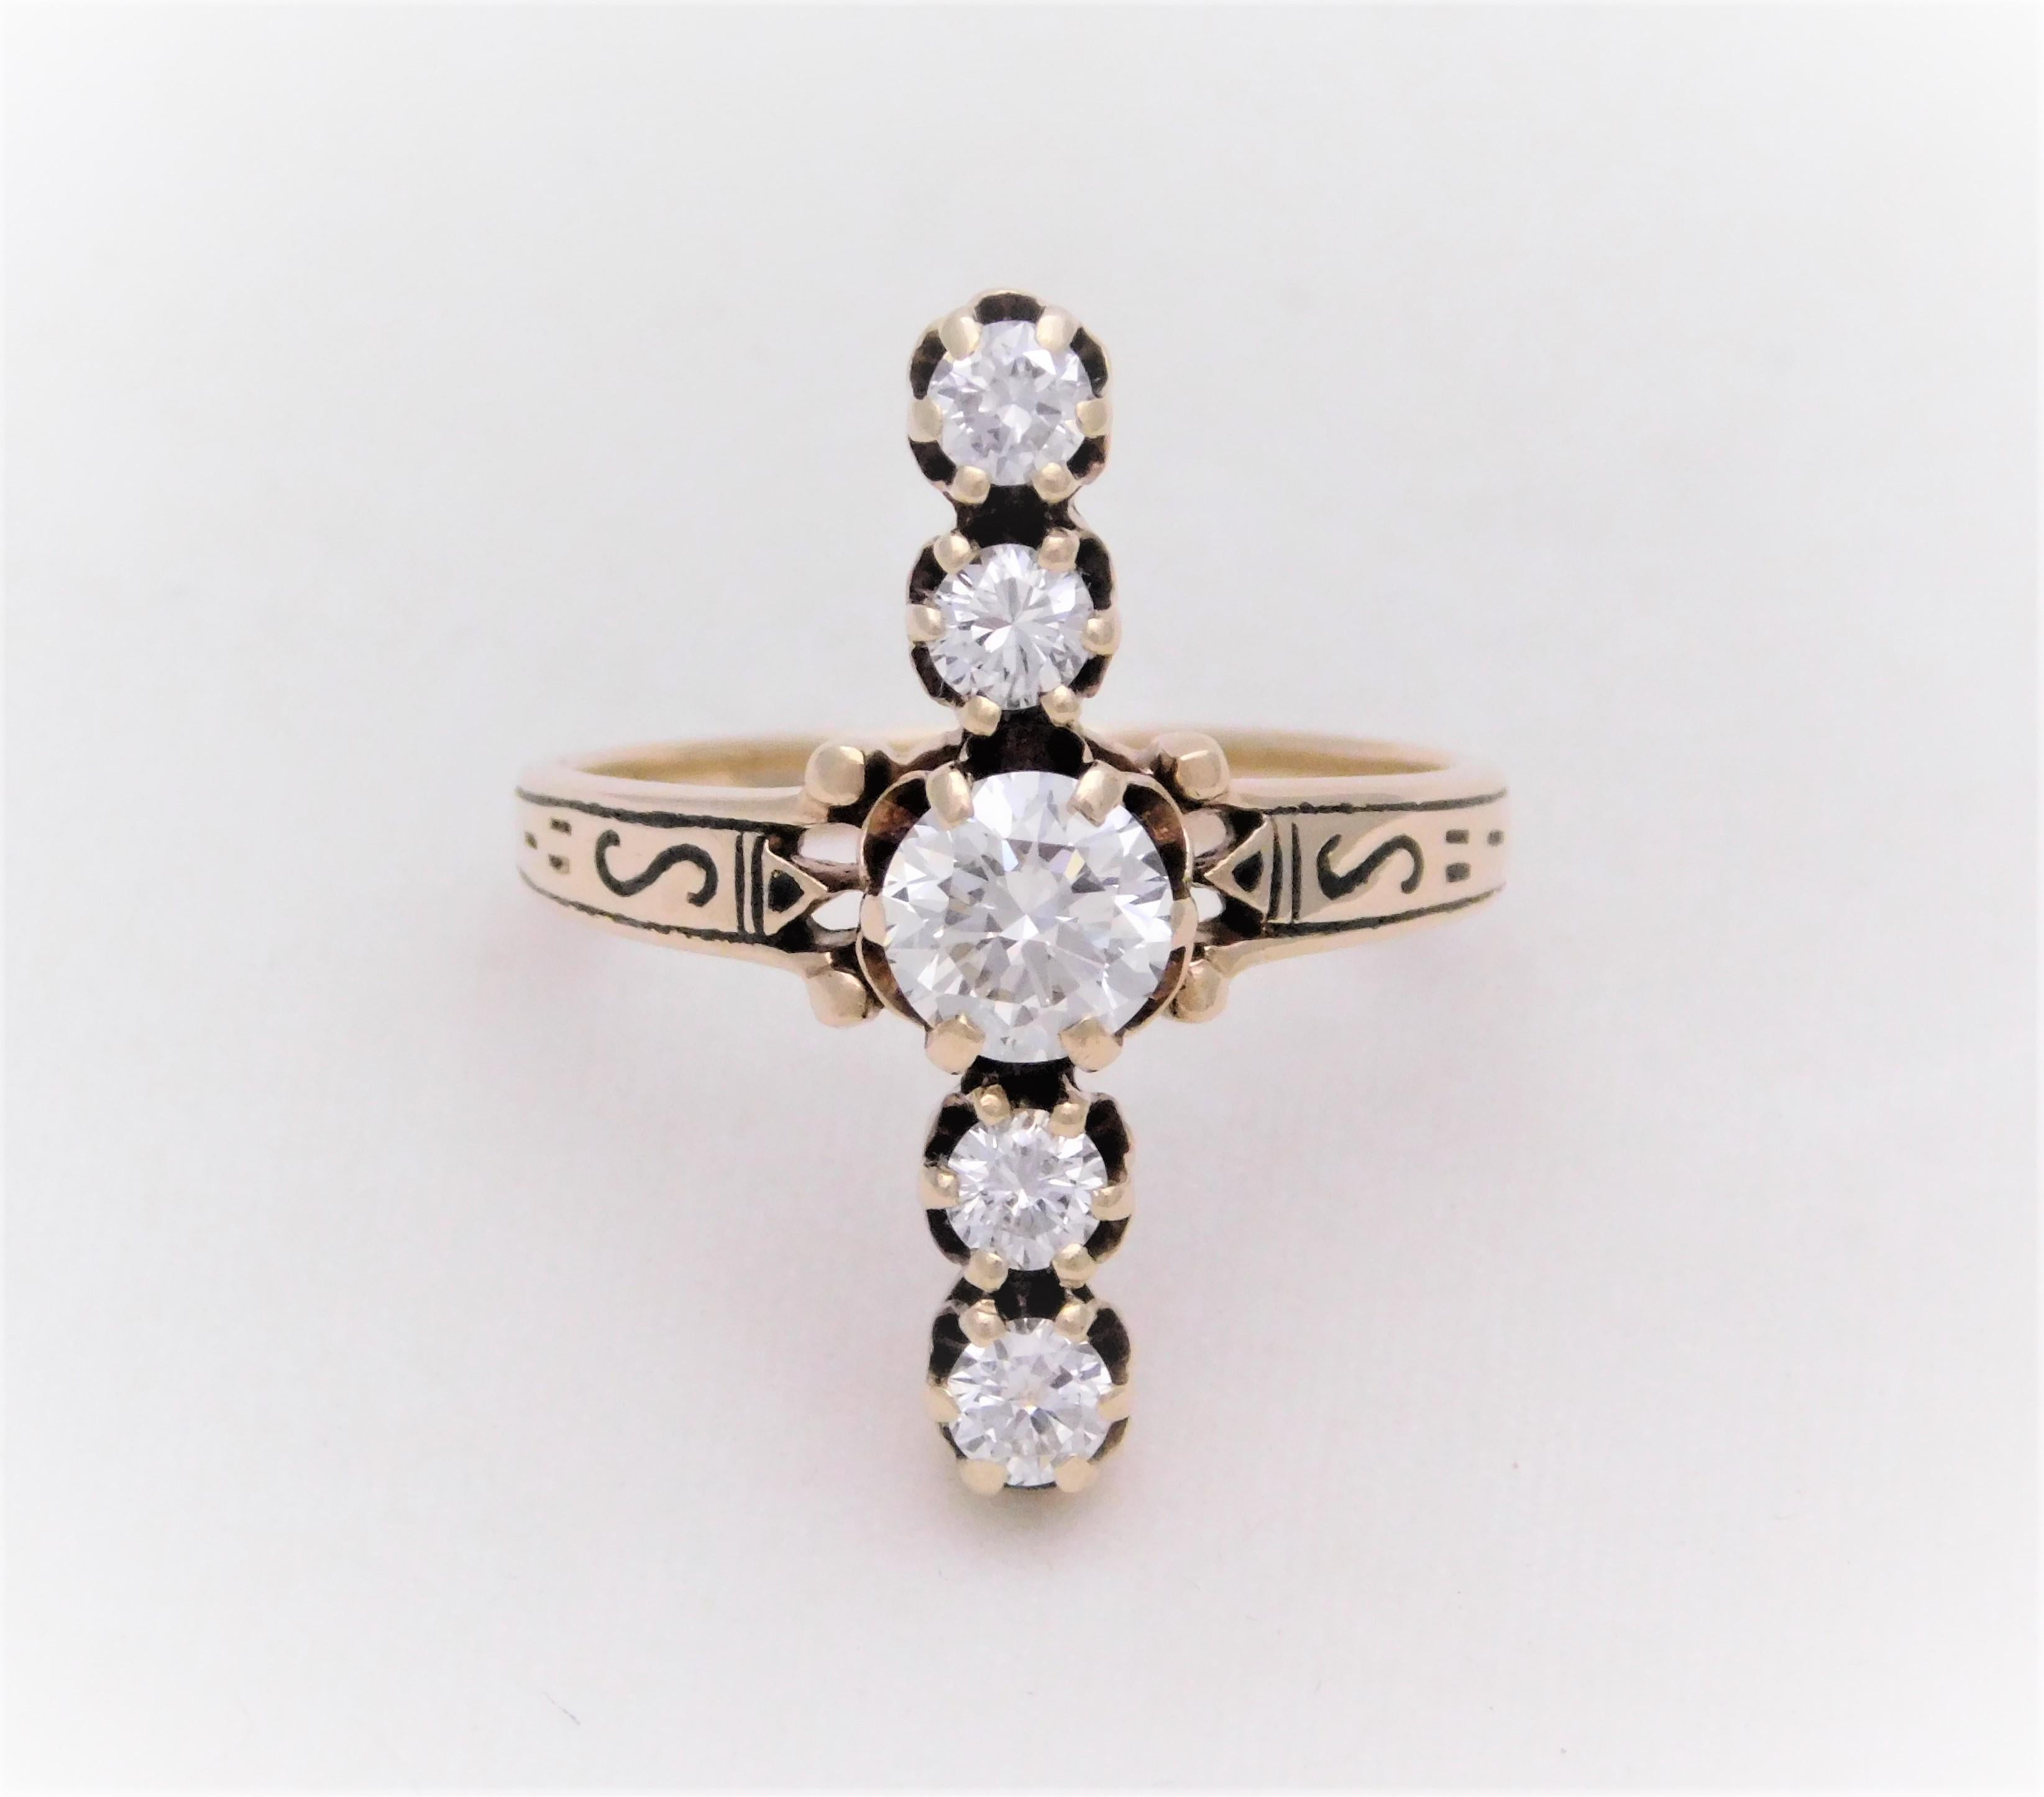 Modernist Unique Midcentury 1.22 Carat Diamond “Line” Cocktail Ring For Sale